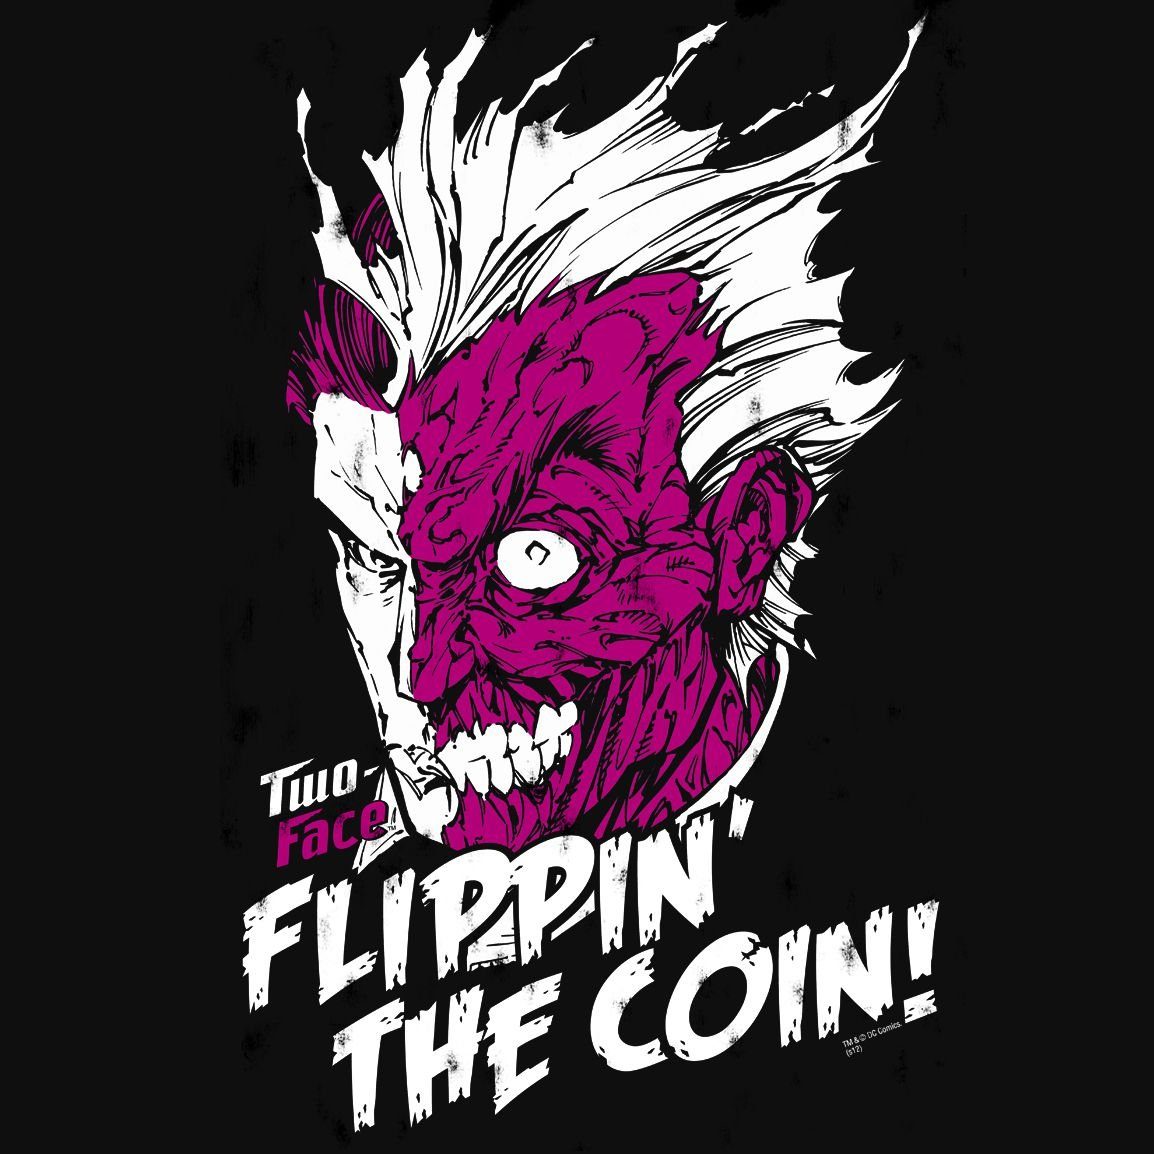 Herren Shirts LOGOSHIRT T-Shirt Two Face - Flippin- The Coin mit tollem Two Face-Print